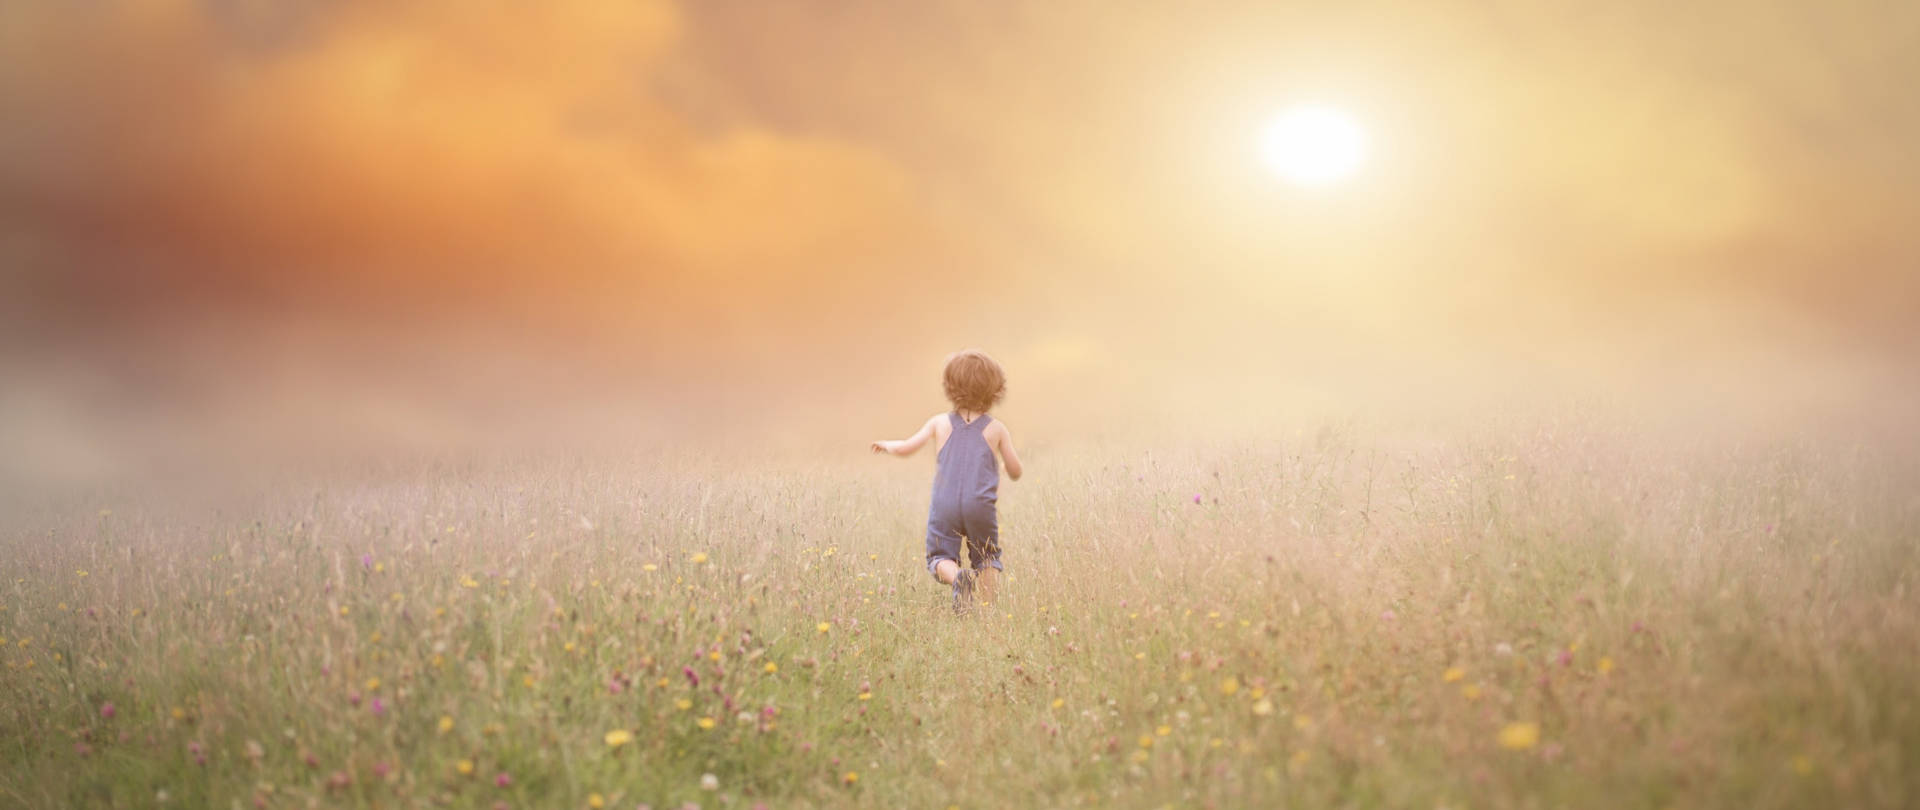 Running Child In Landscape Shot Wallpaper